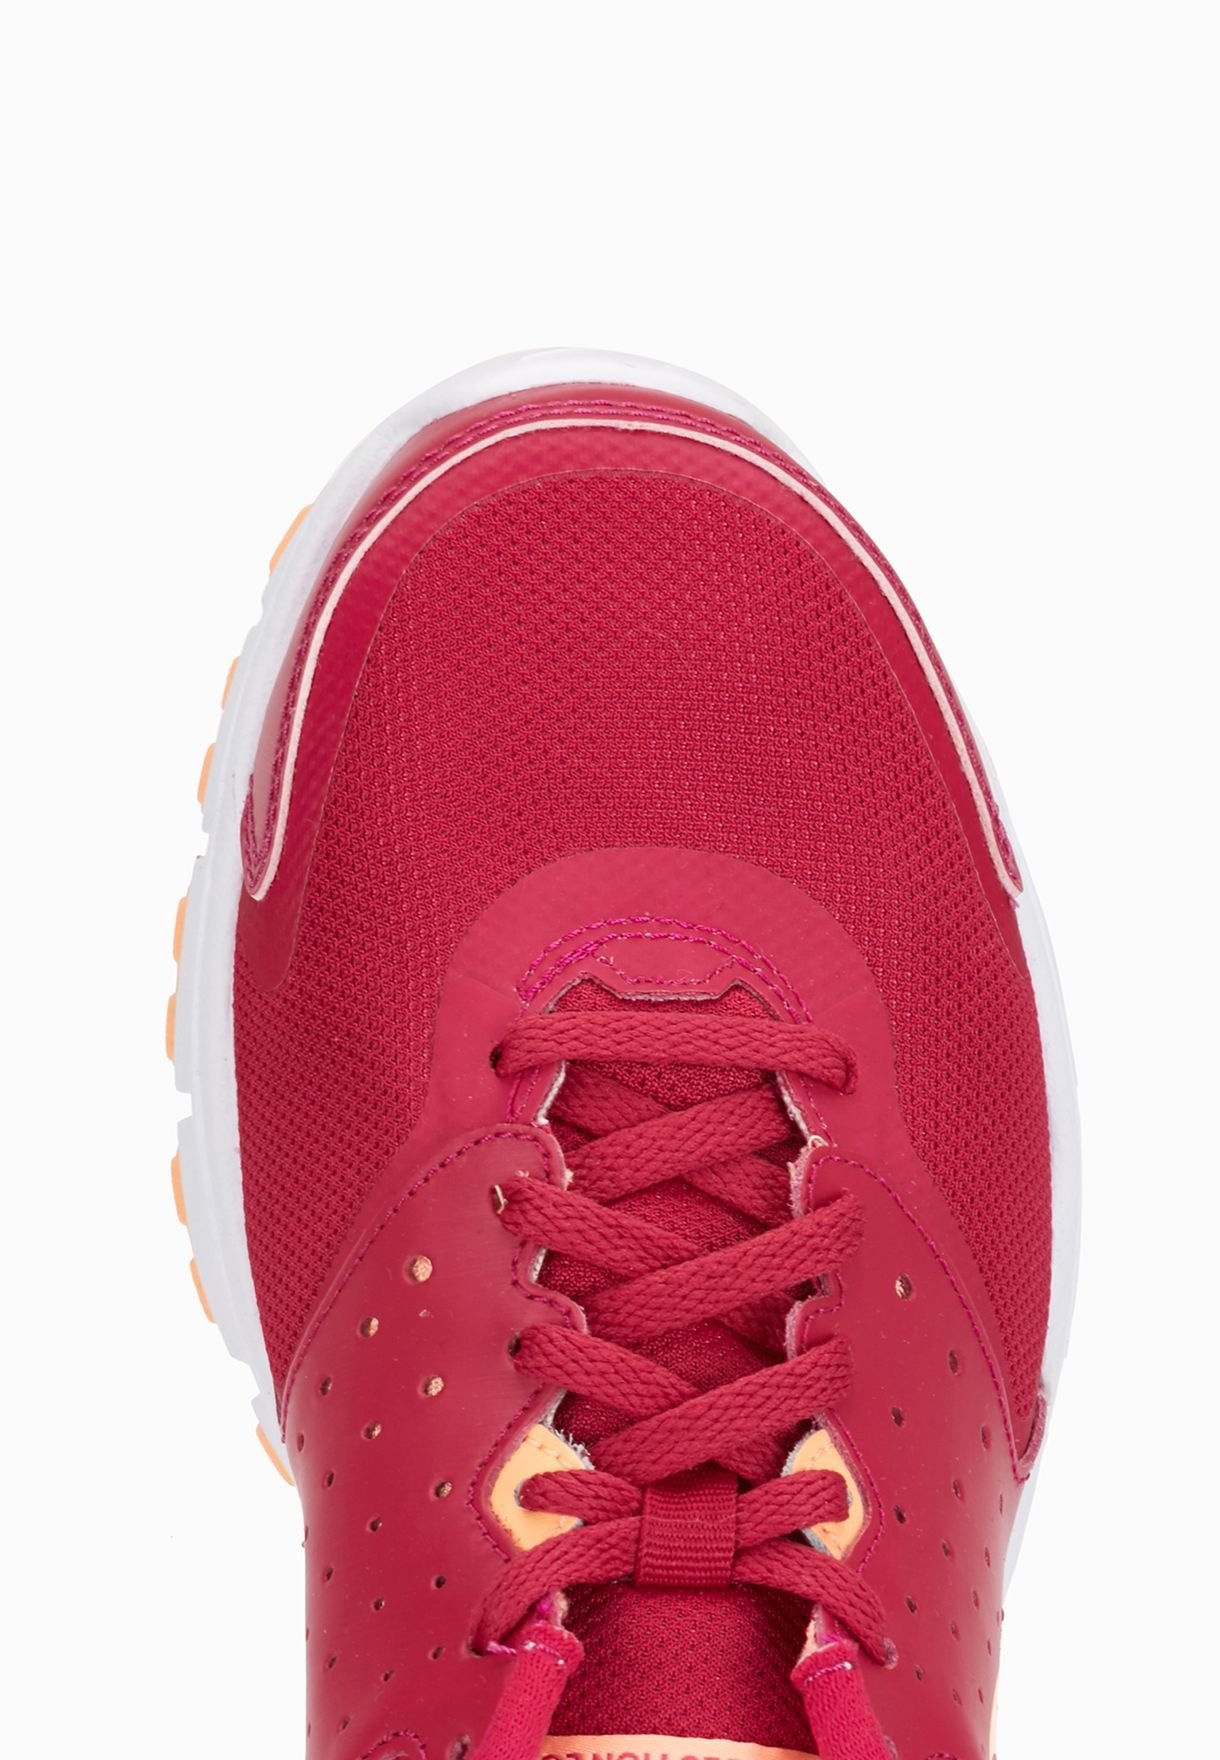 Bežecká obuv Nike Revolution EU -3631210 - korálová